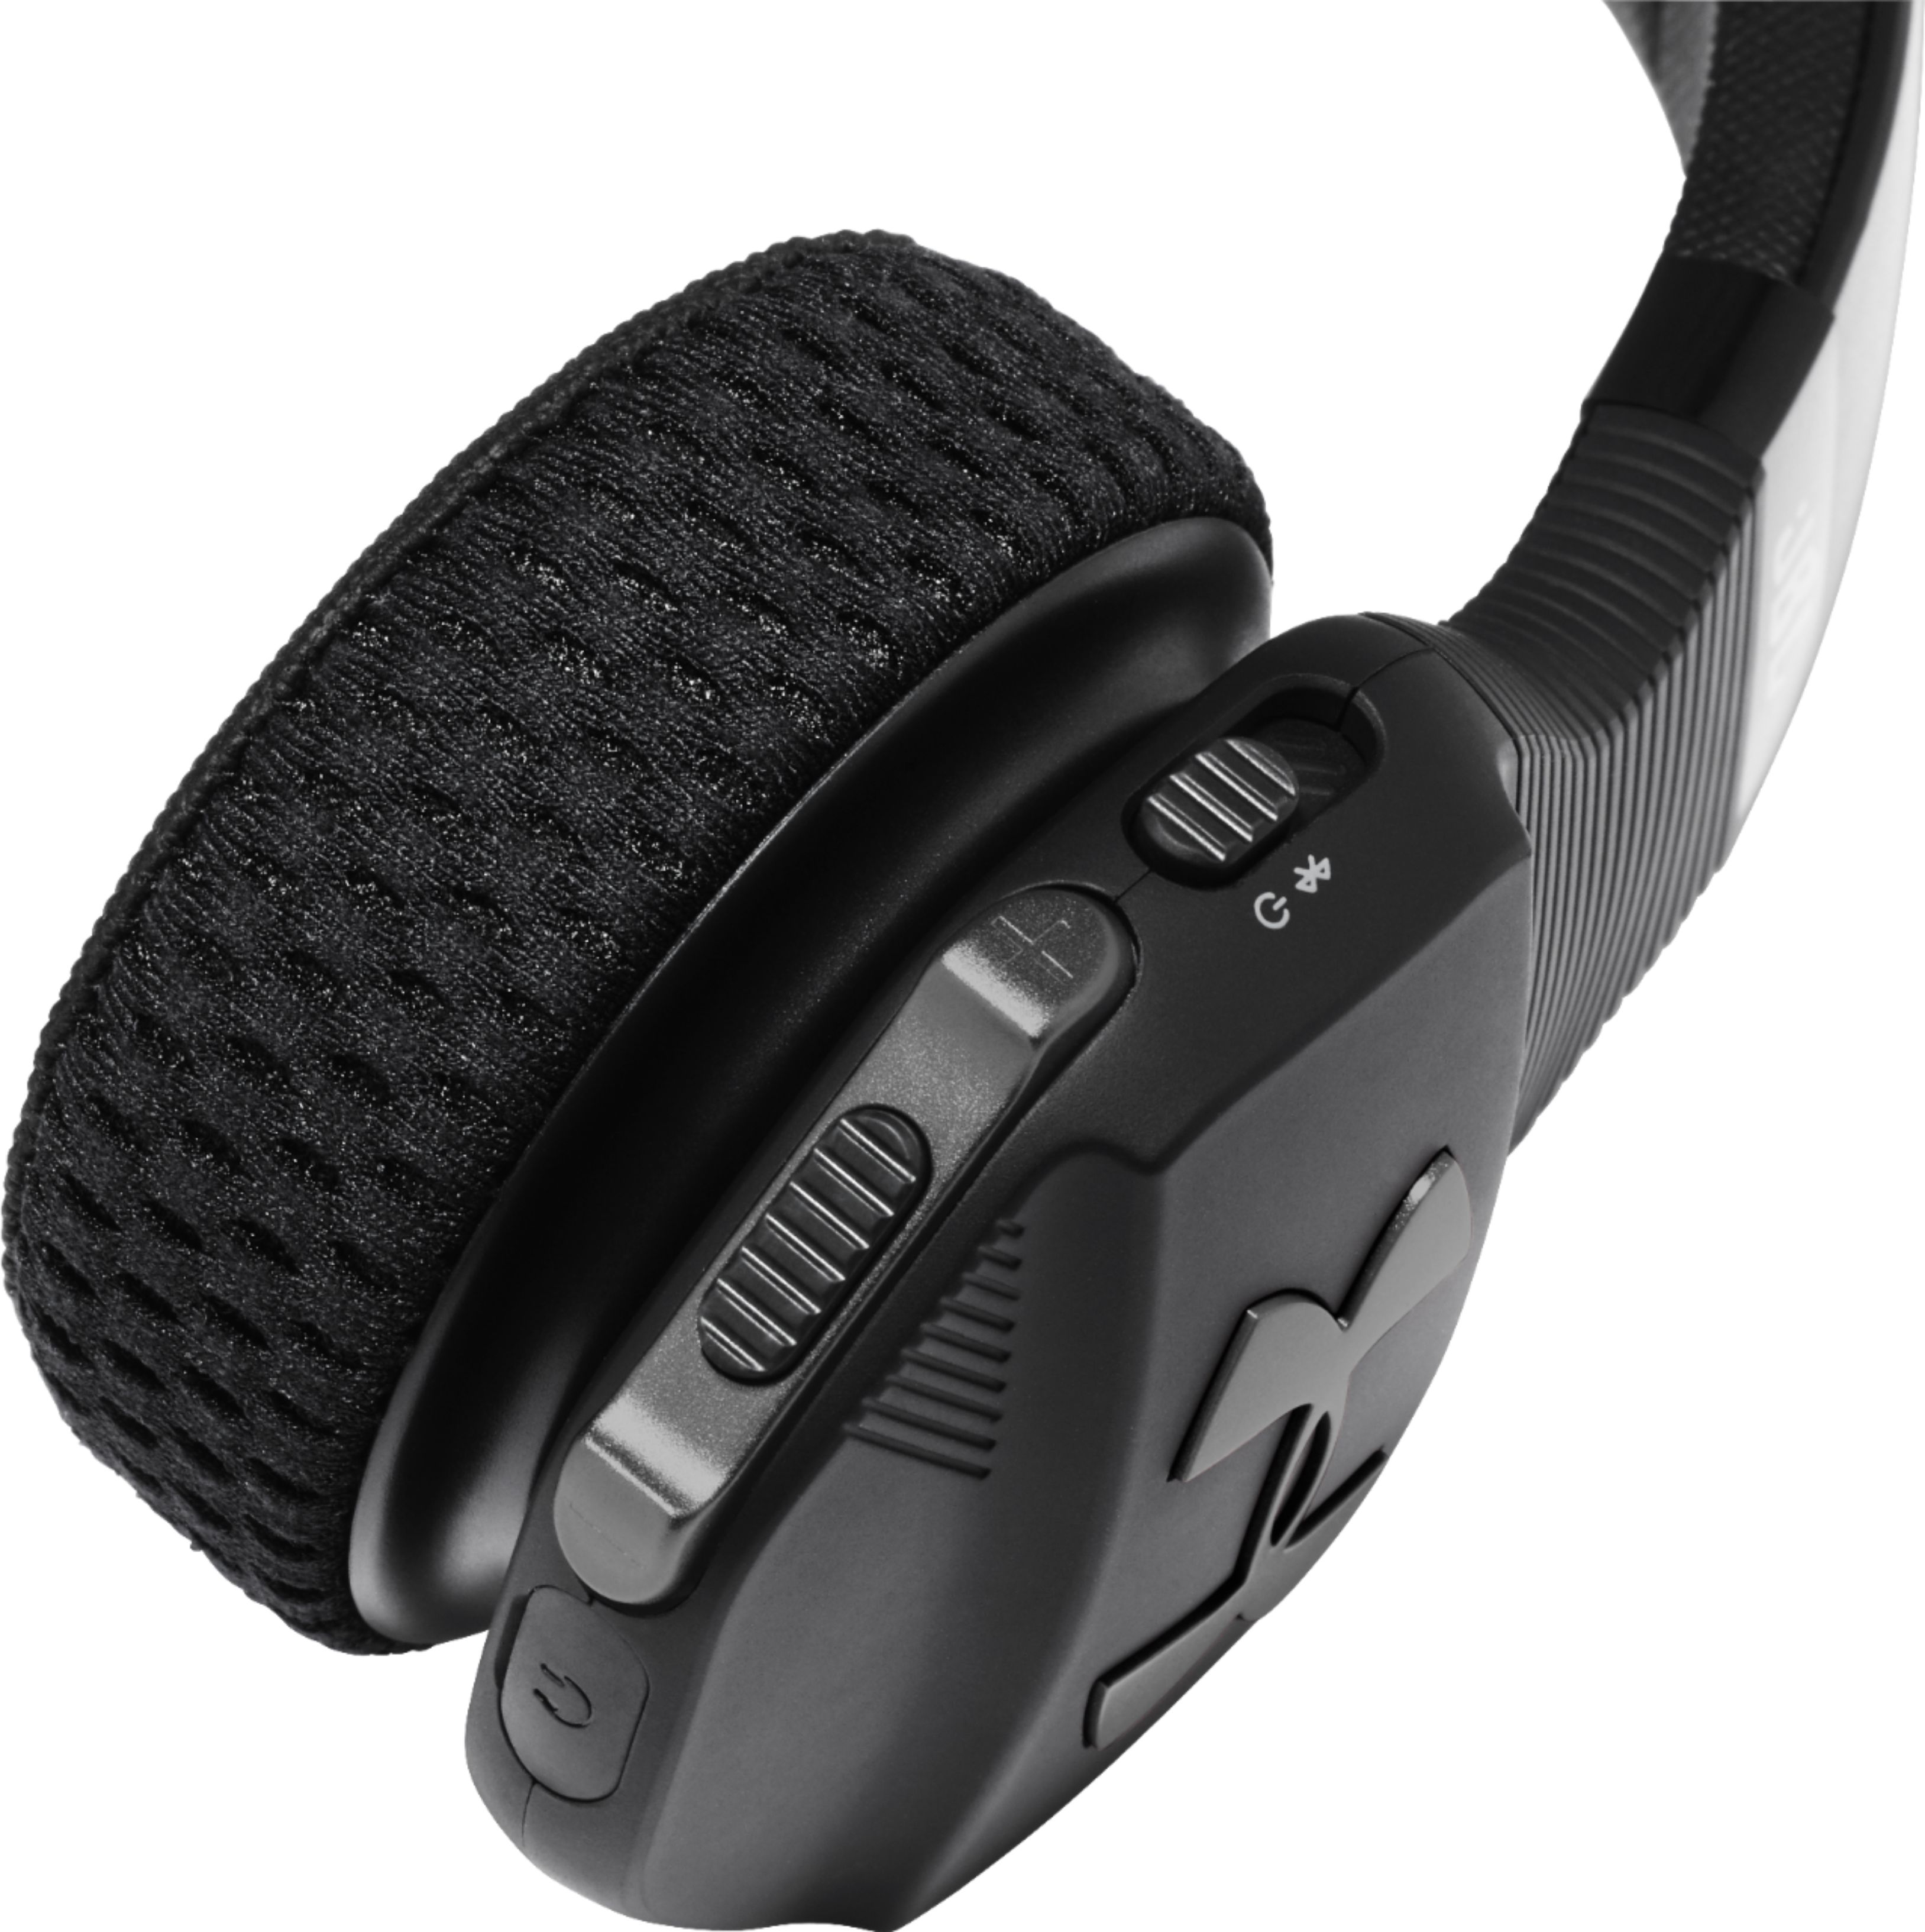 jbl under armour wireless headphones best buy